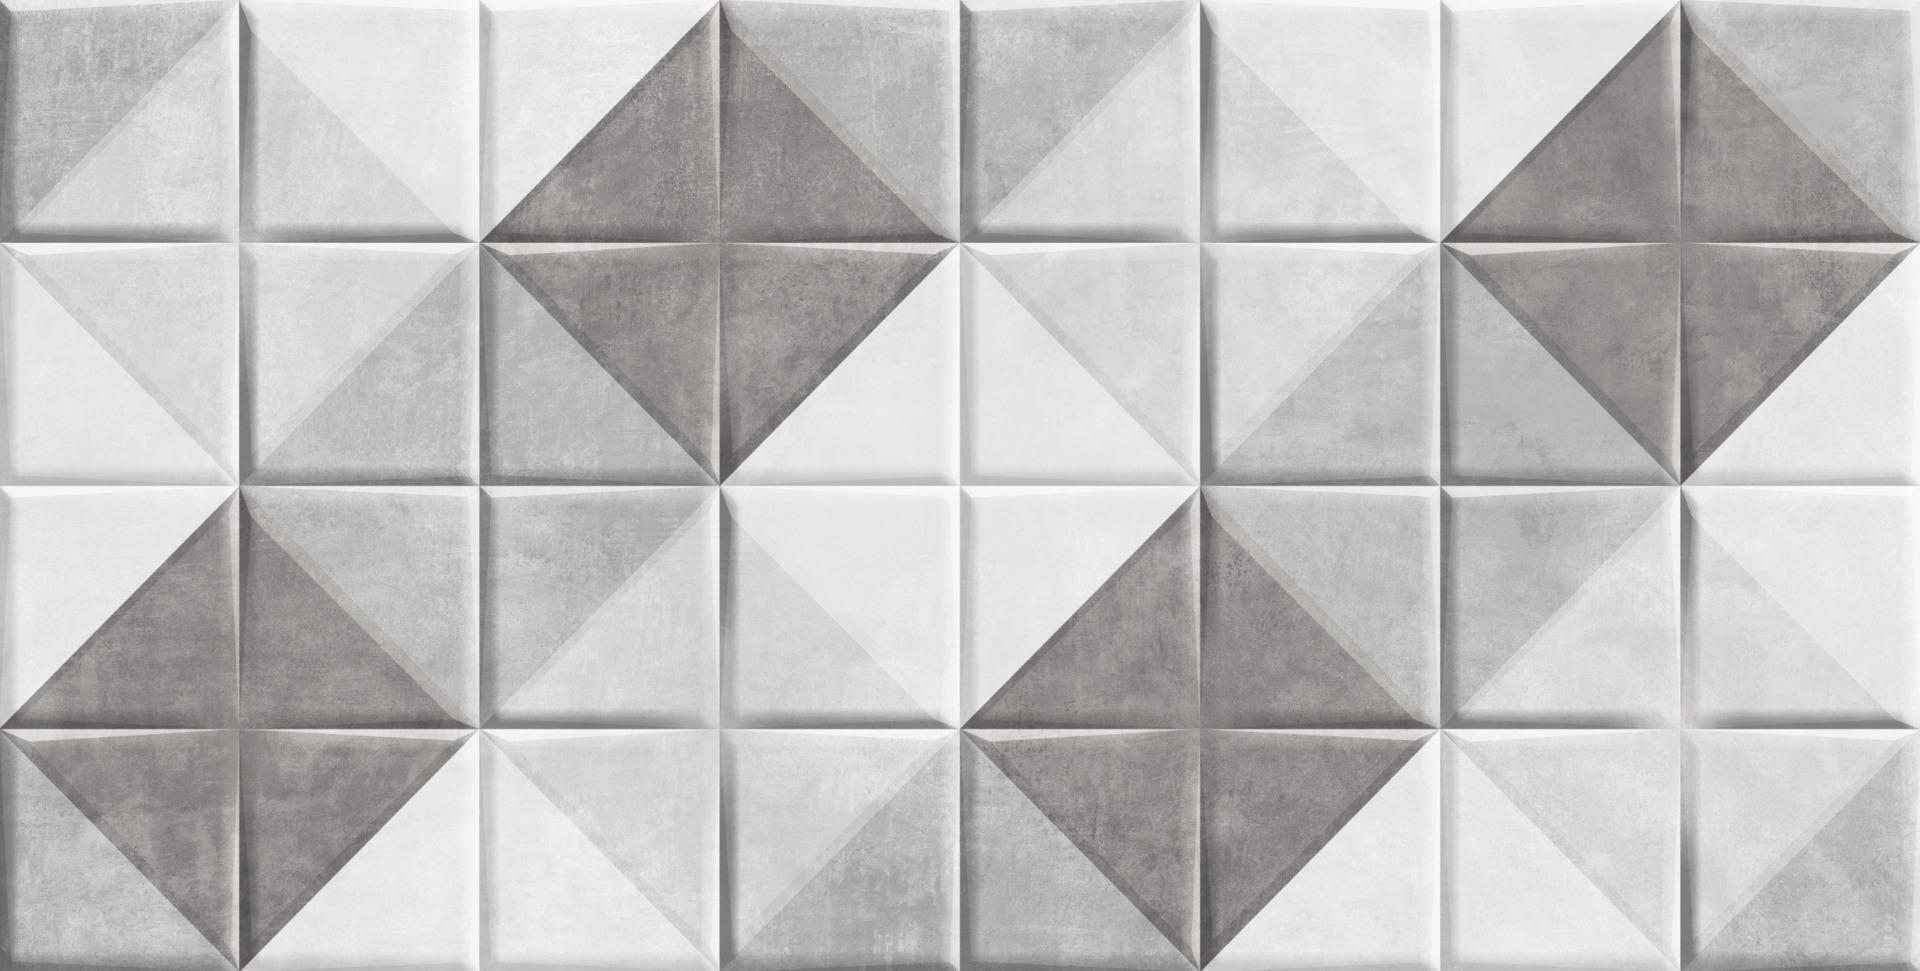 2x4 Double Charge Tiles for Bathroom Tiles, Living Room Tiles, Kitchen Tiles, Bedroom Tiles, Accent Tiles, Automotive Tiles, Bar/Restaurant, Commercial/Office